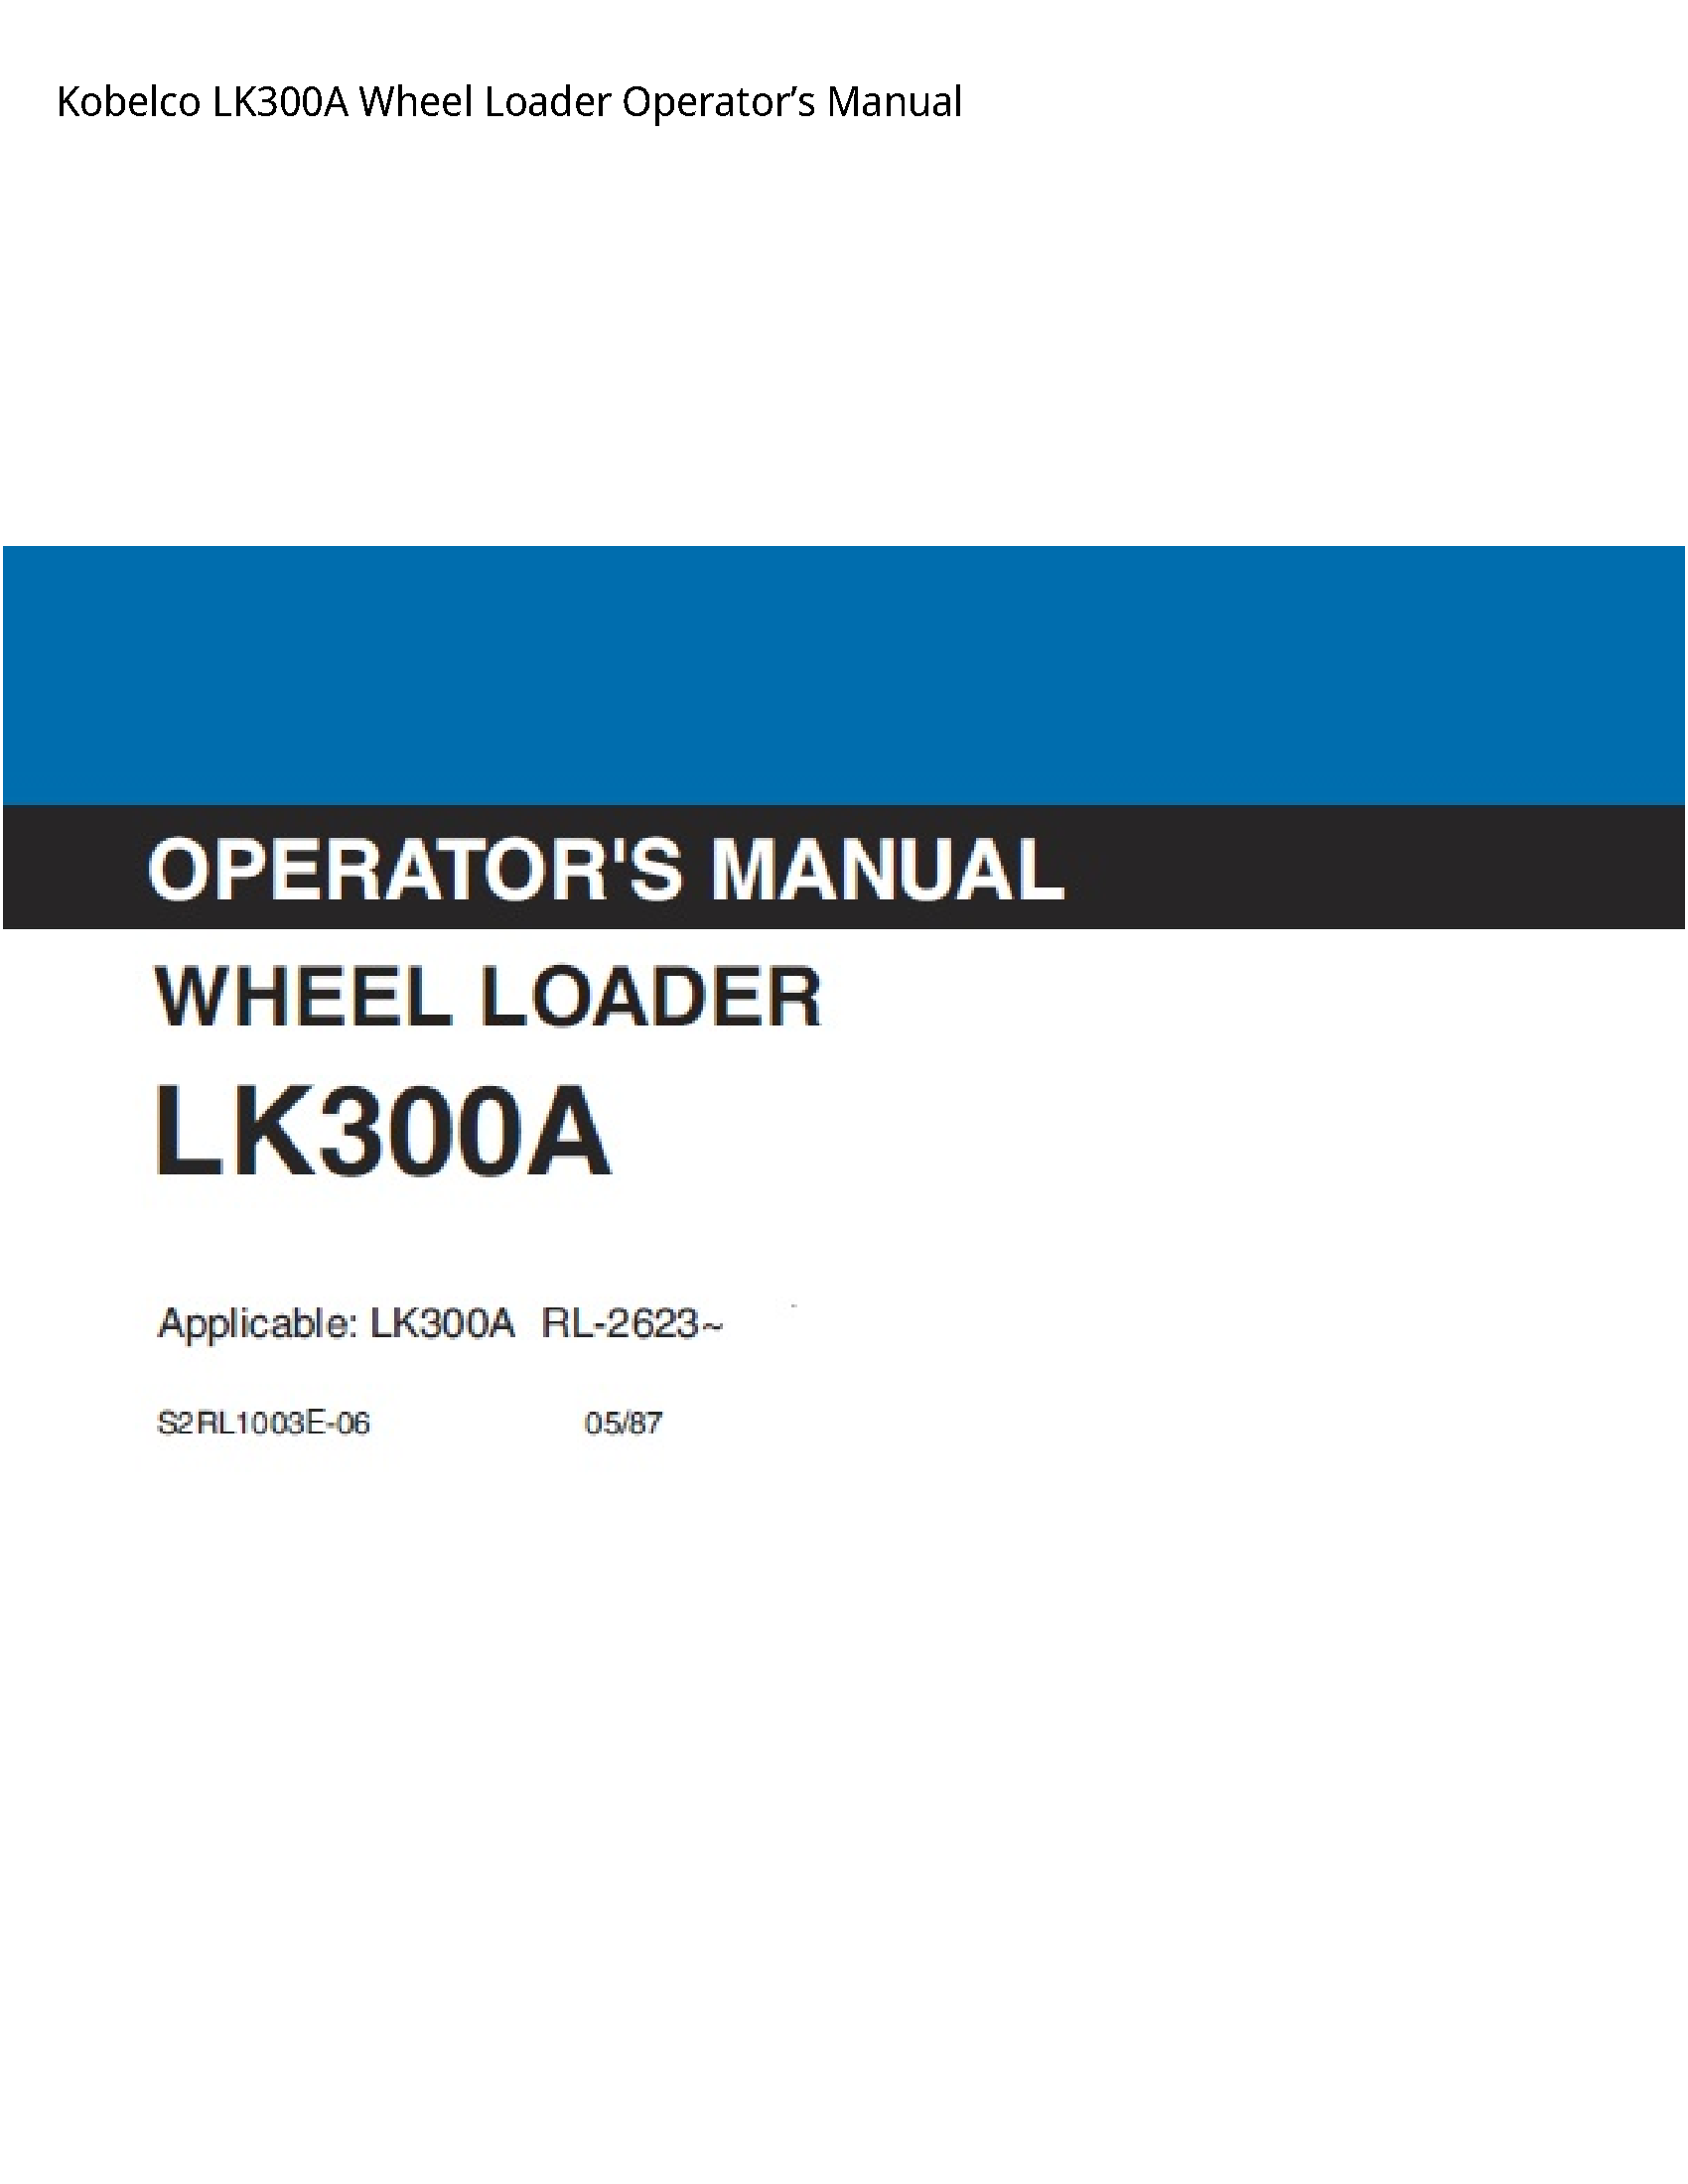 Kobelco LK300A Wheel Loader Operator’s manual